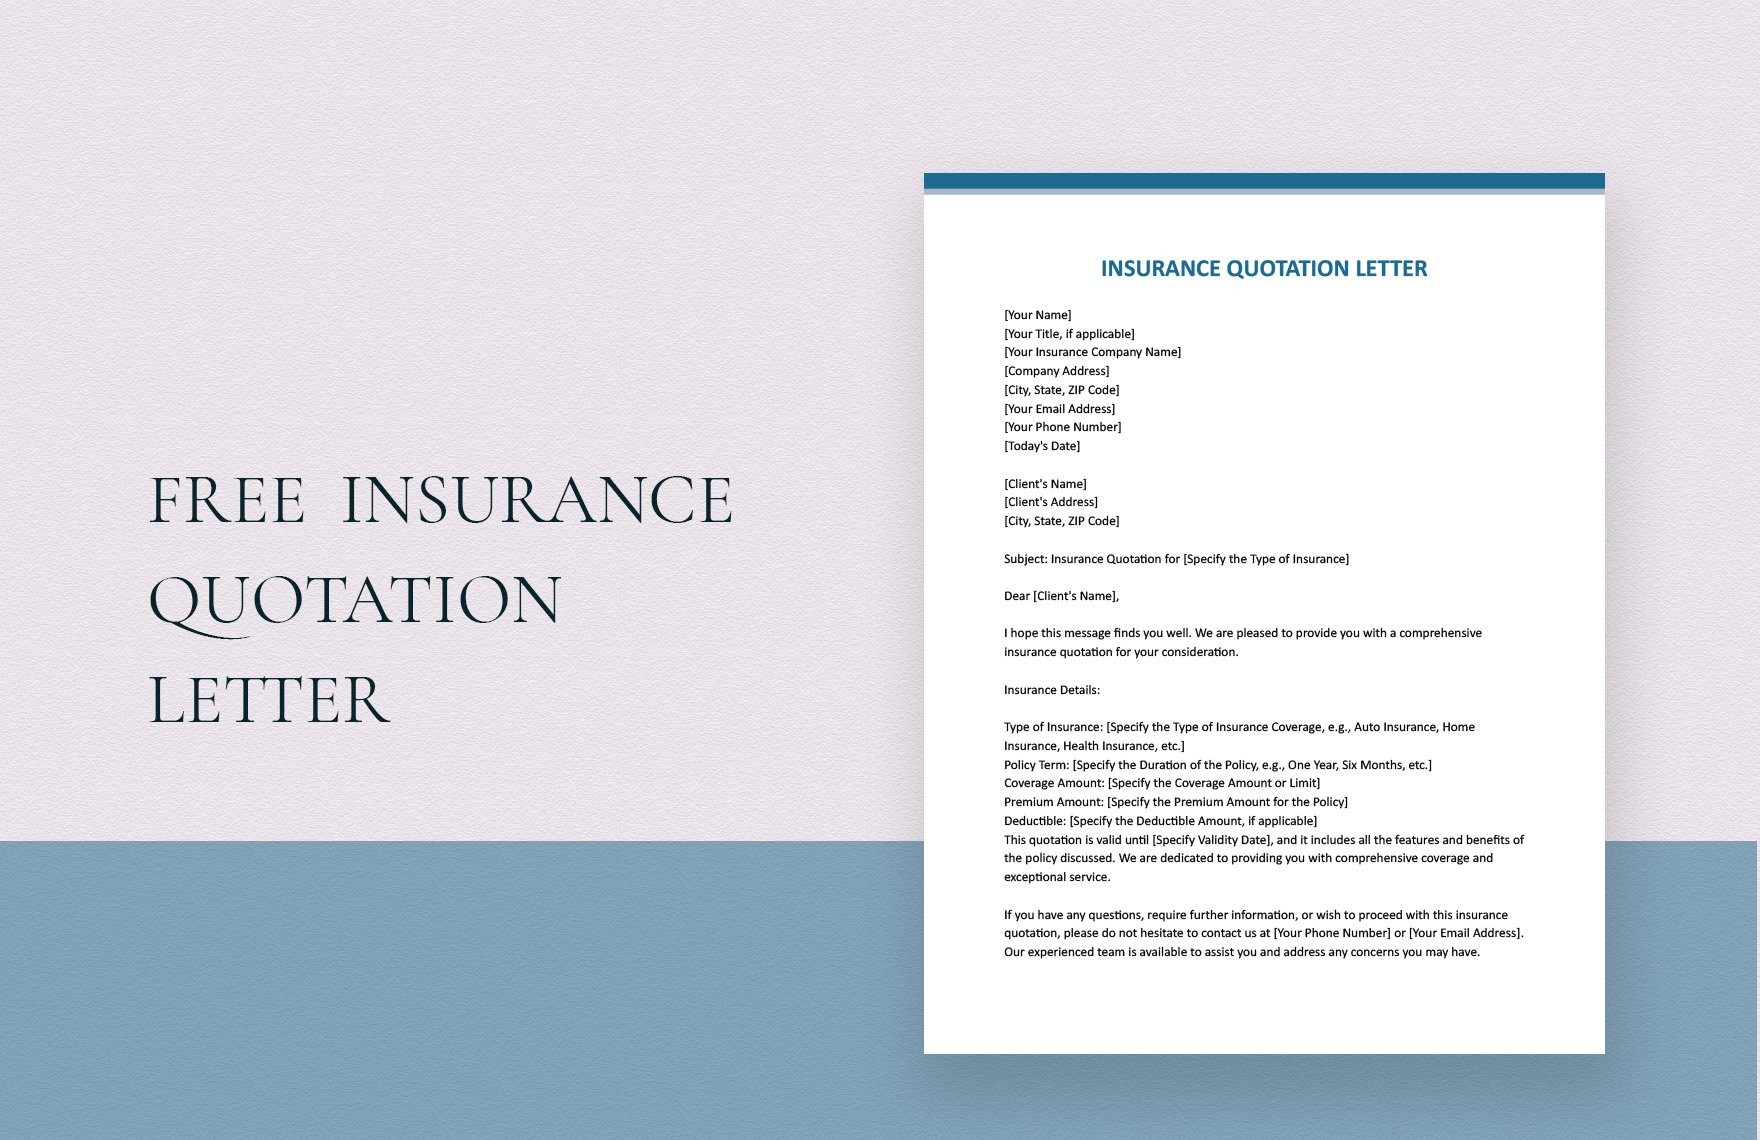 Insurance Quotation Letter